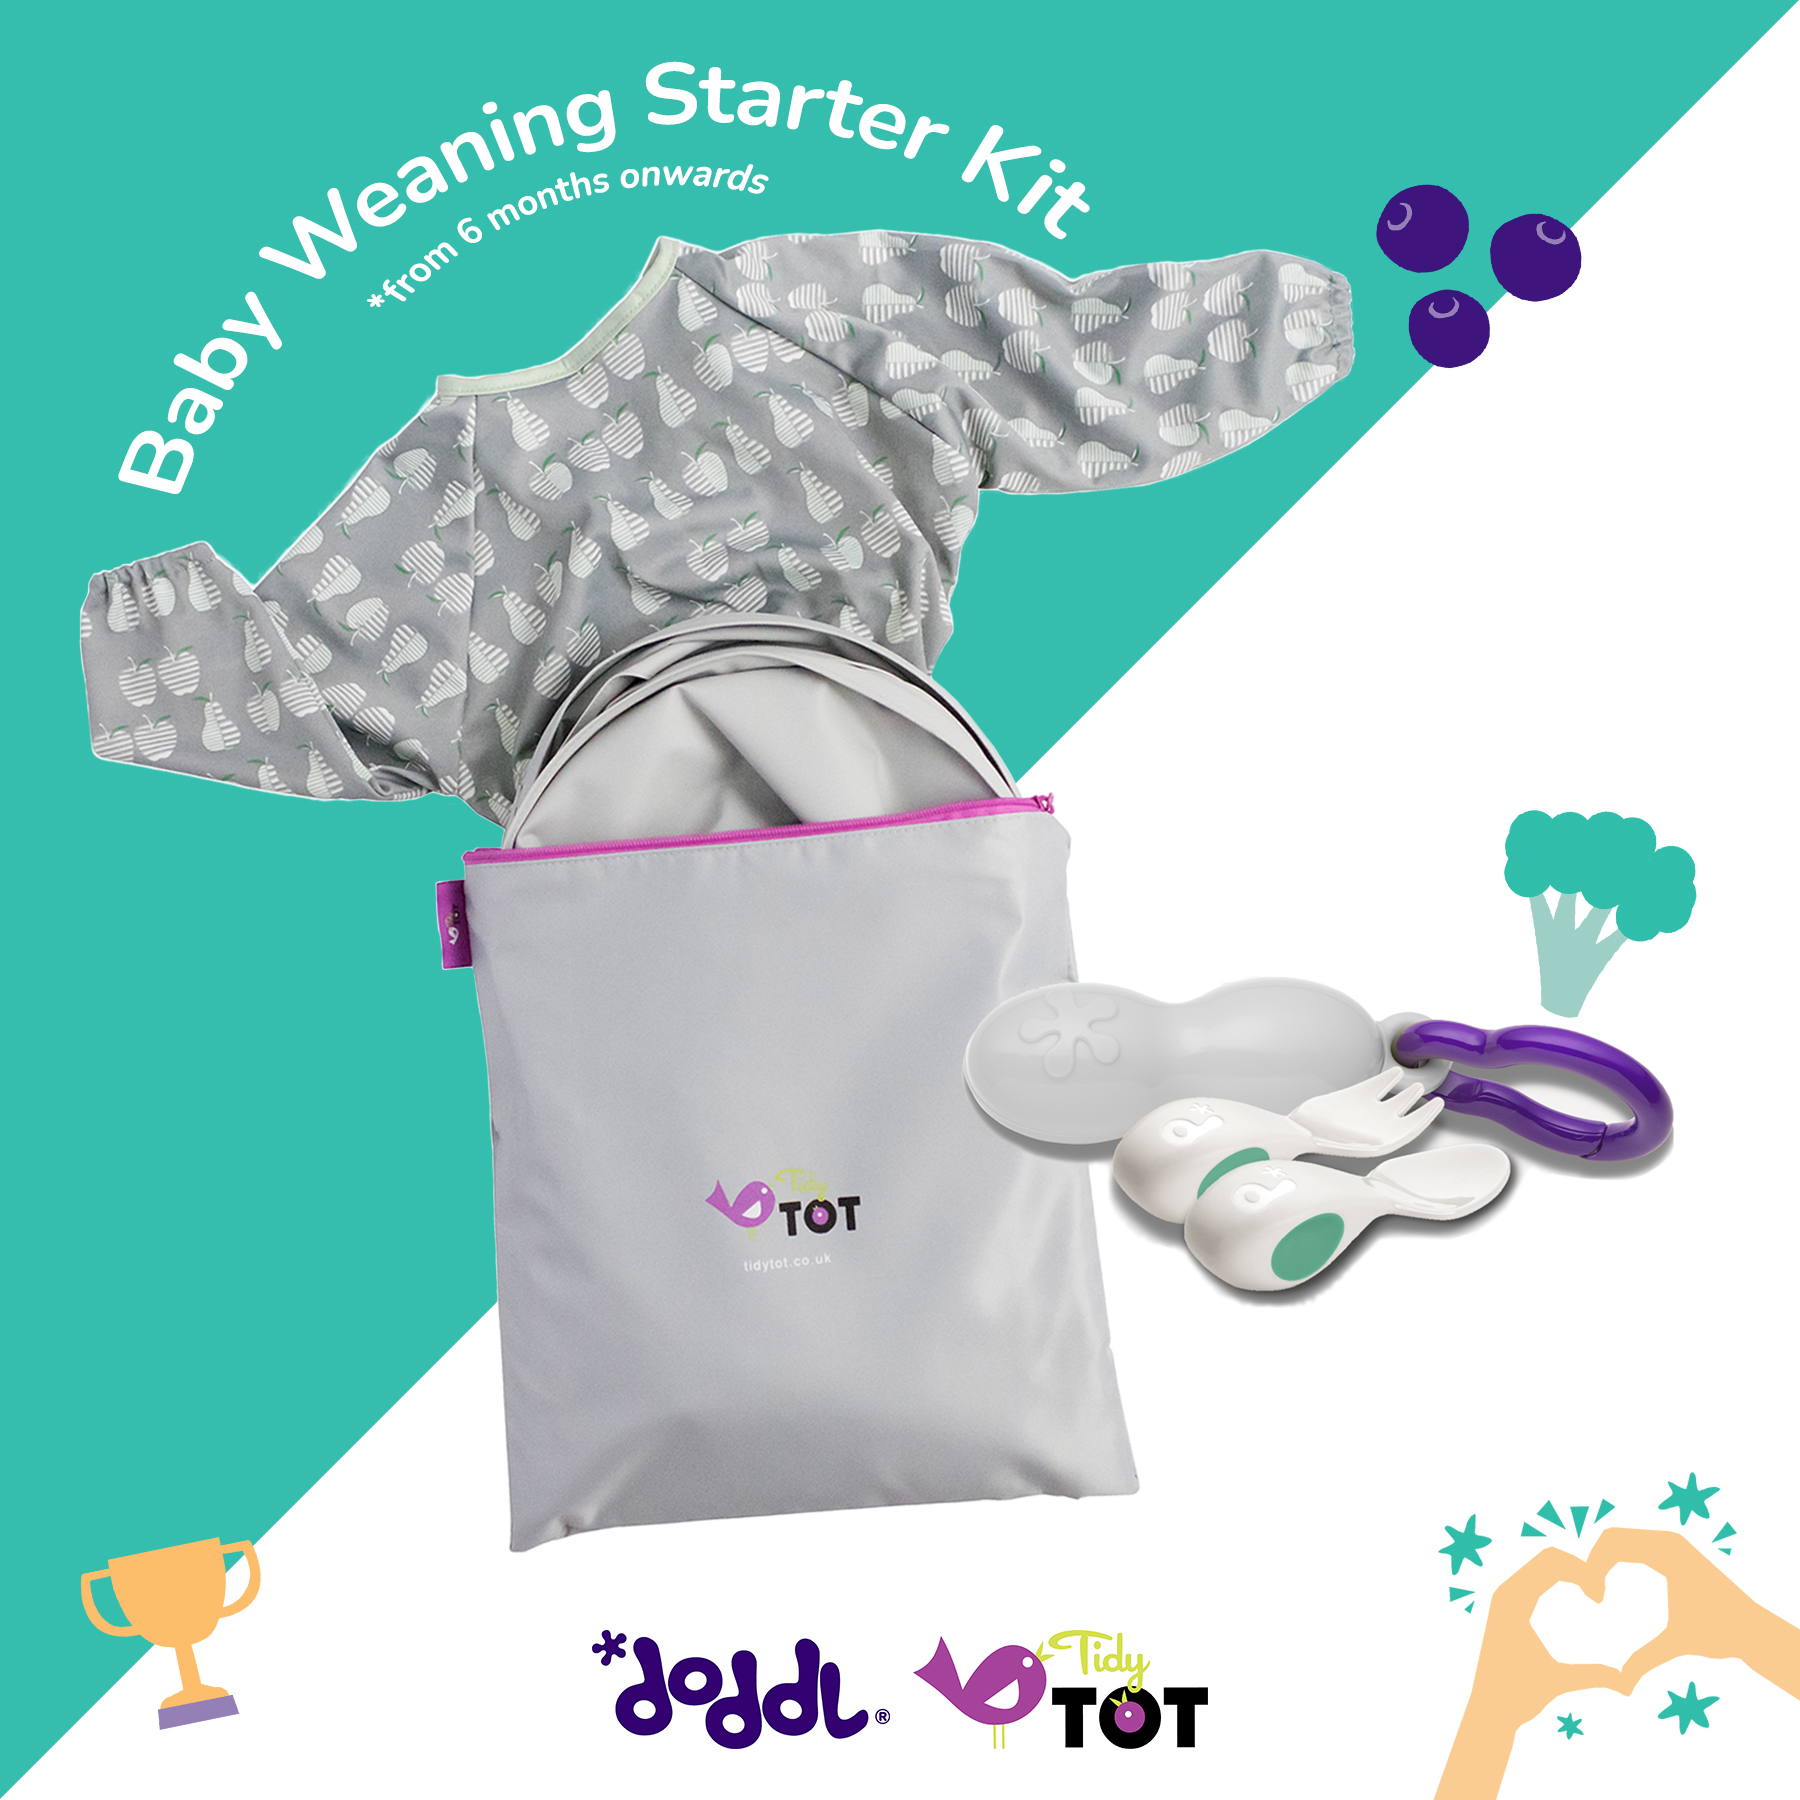 Baby Weaning Starter Kit - Tidy Tot Bib & Tray Kit, doddl Baby Cutlery Set & Case